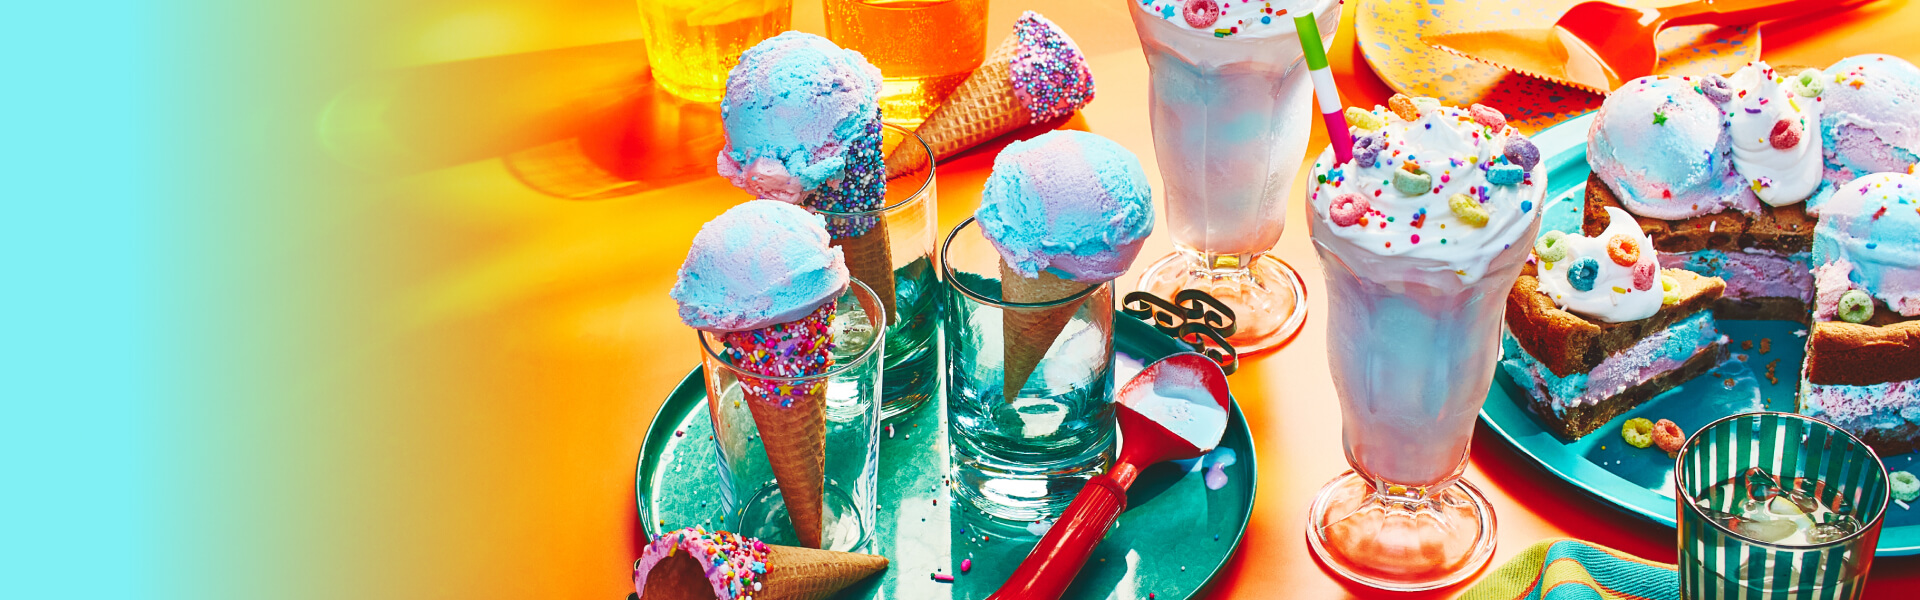 Unicorn twirl ice cream in sugar cones, in a milkshake, and ice cream cookie cake on an orange back drop.